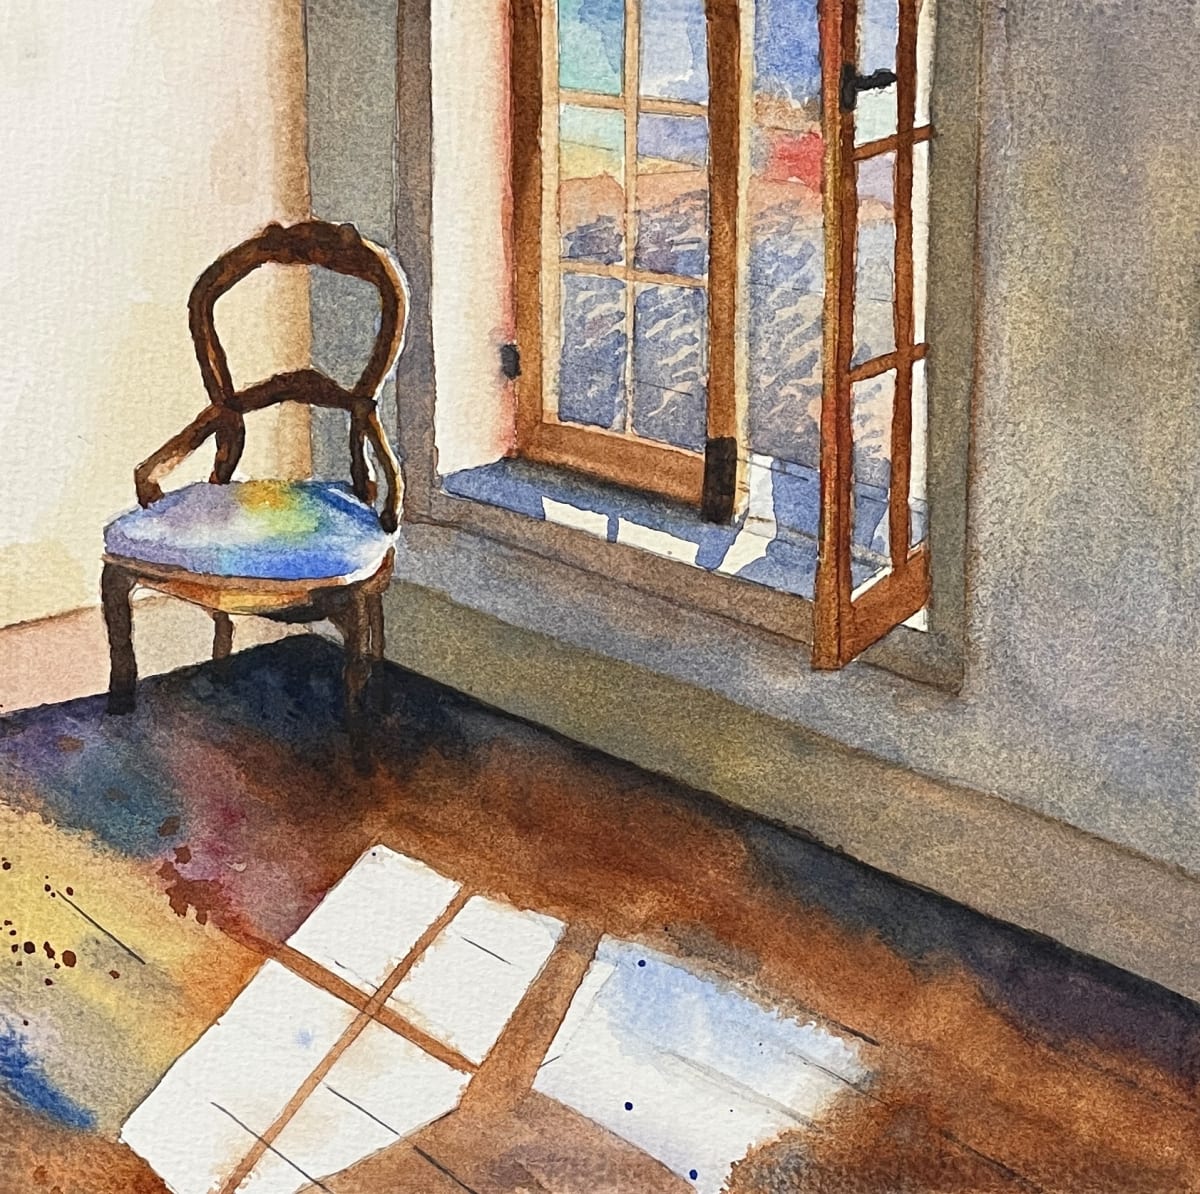 A Window Opens by Margie Hildreth 